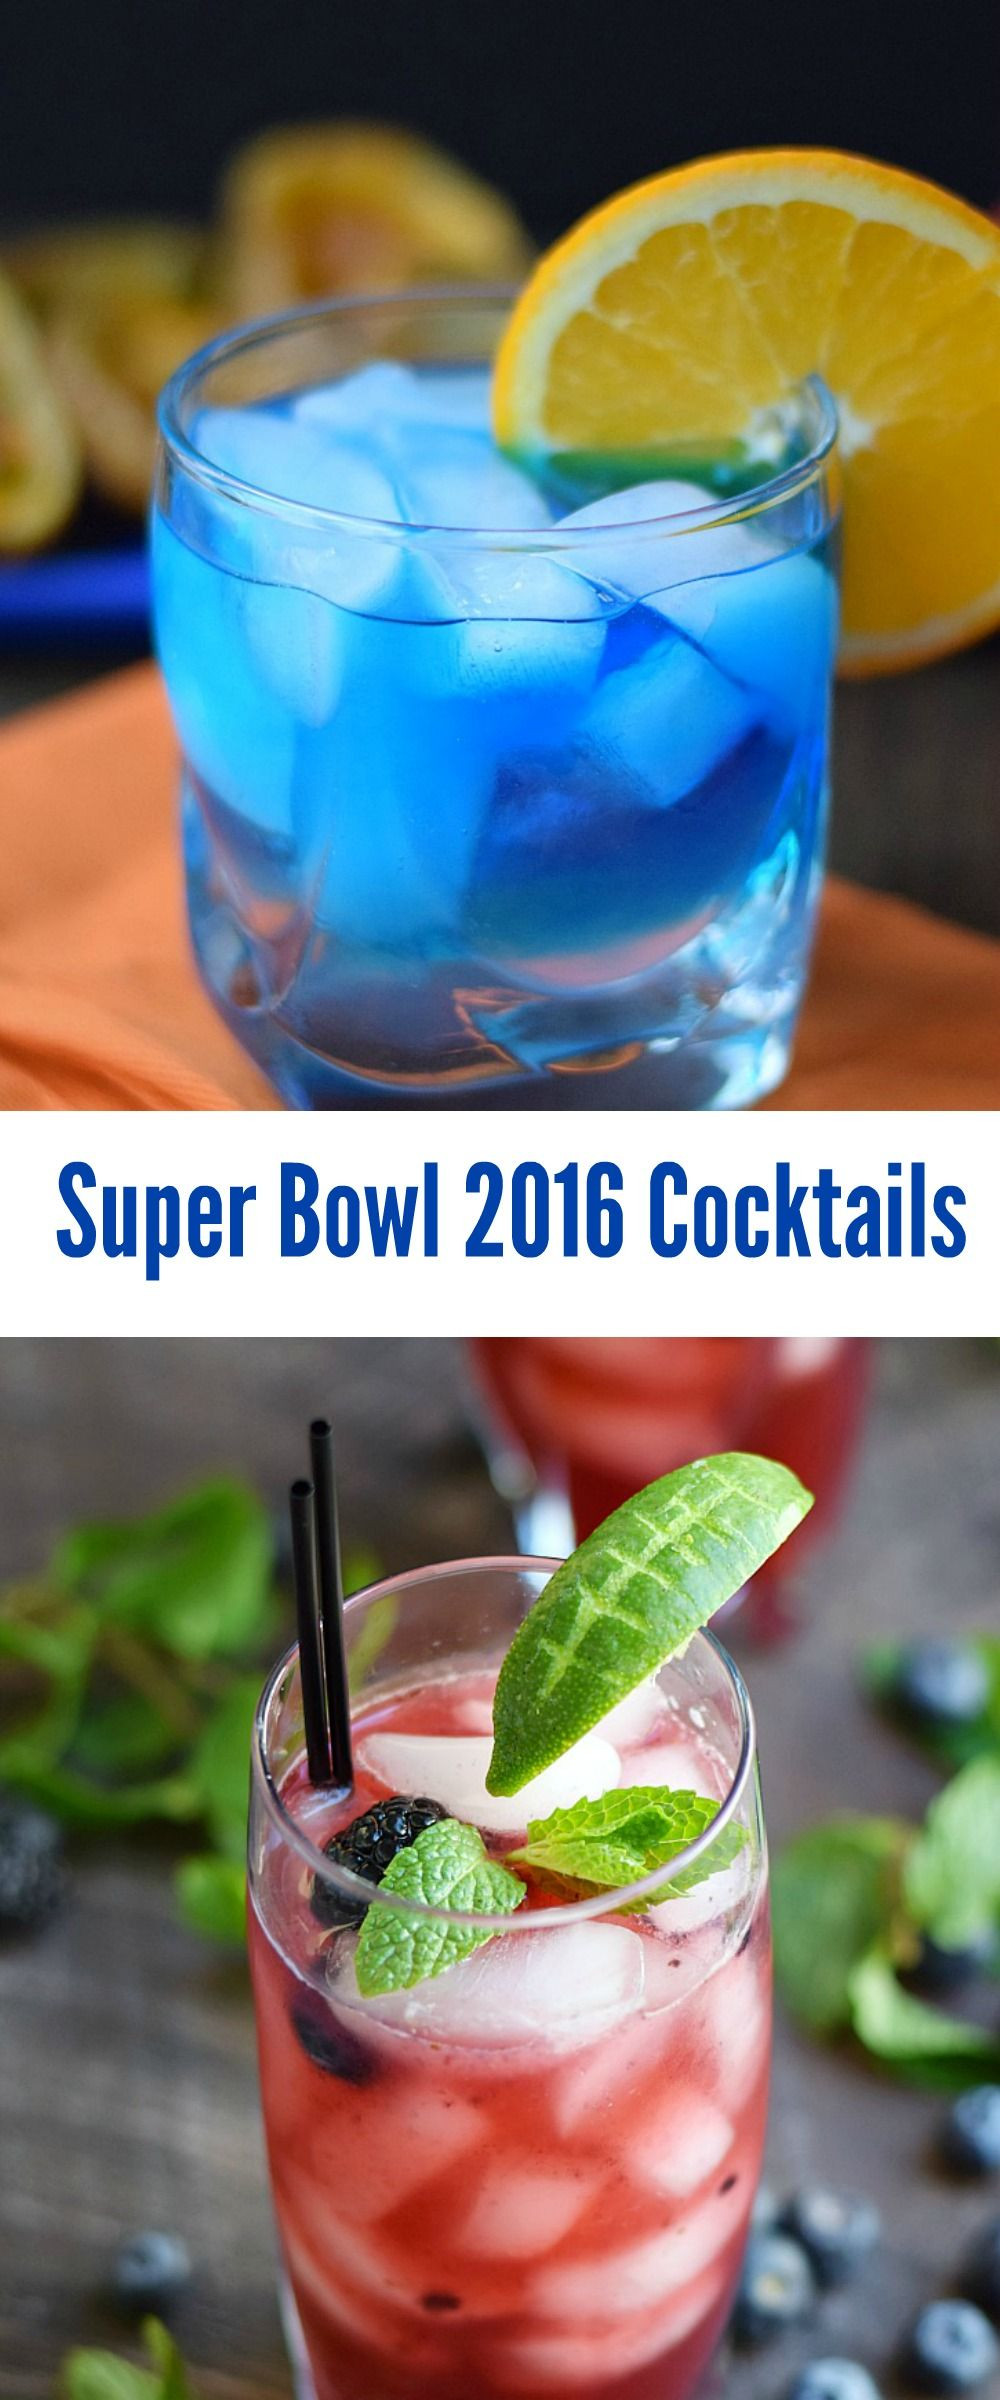 Super Bowl Cocktails Recipes
 Super Bowl 2016 Cocktails Broncos vs Panthers